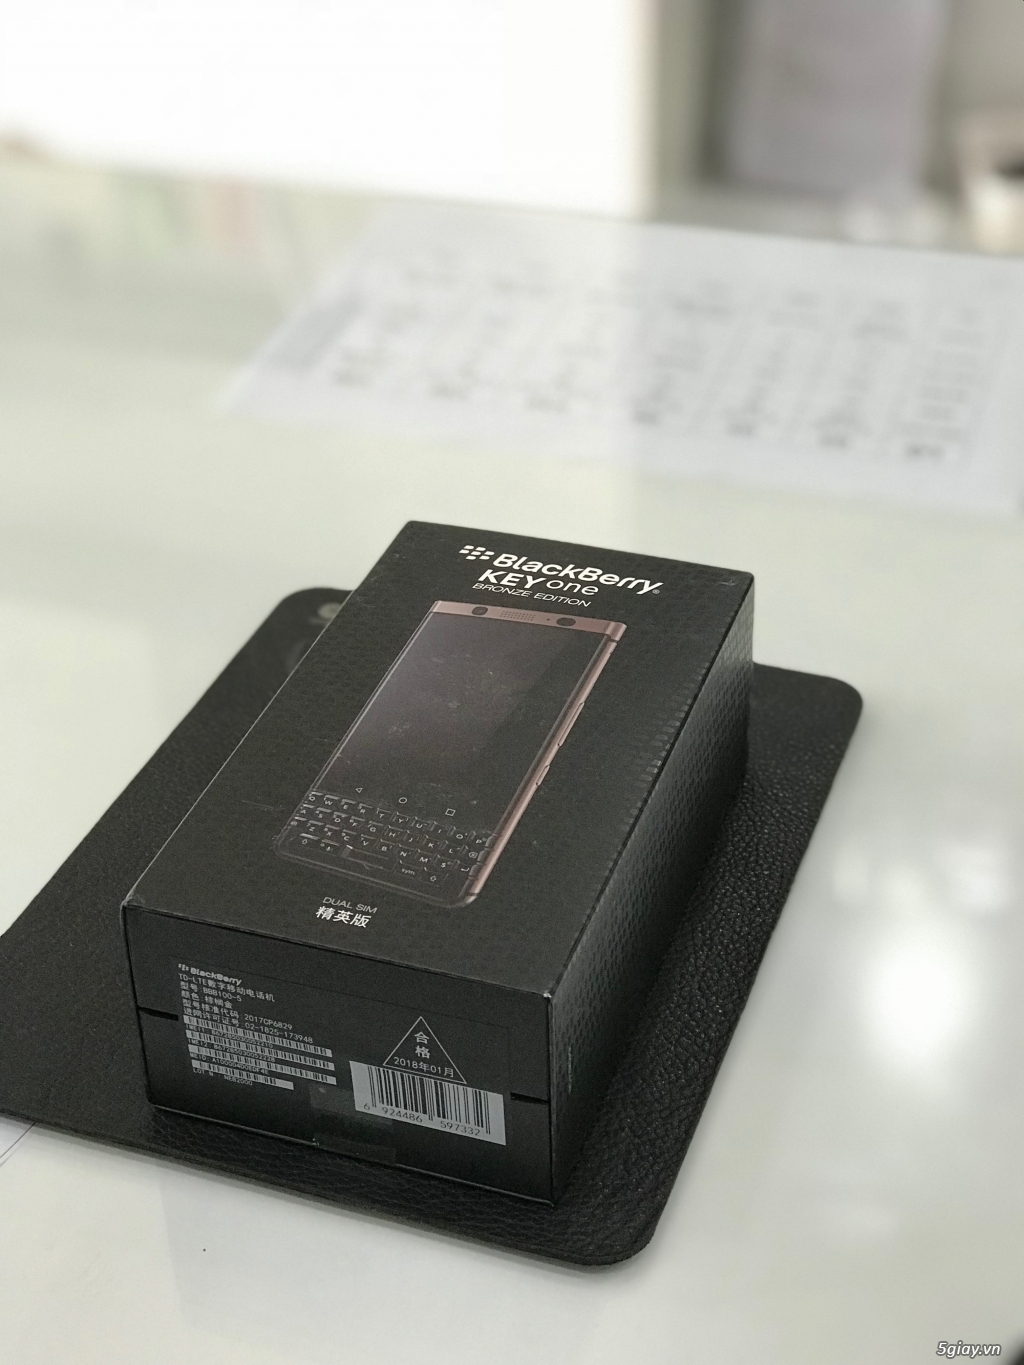 Blackberry keyone bronze 2 sim, còn bh 12thang - 4